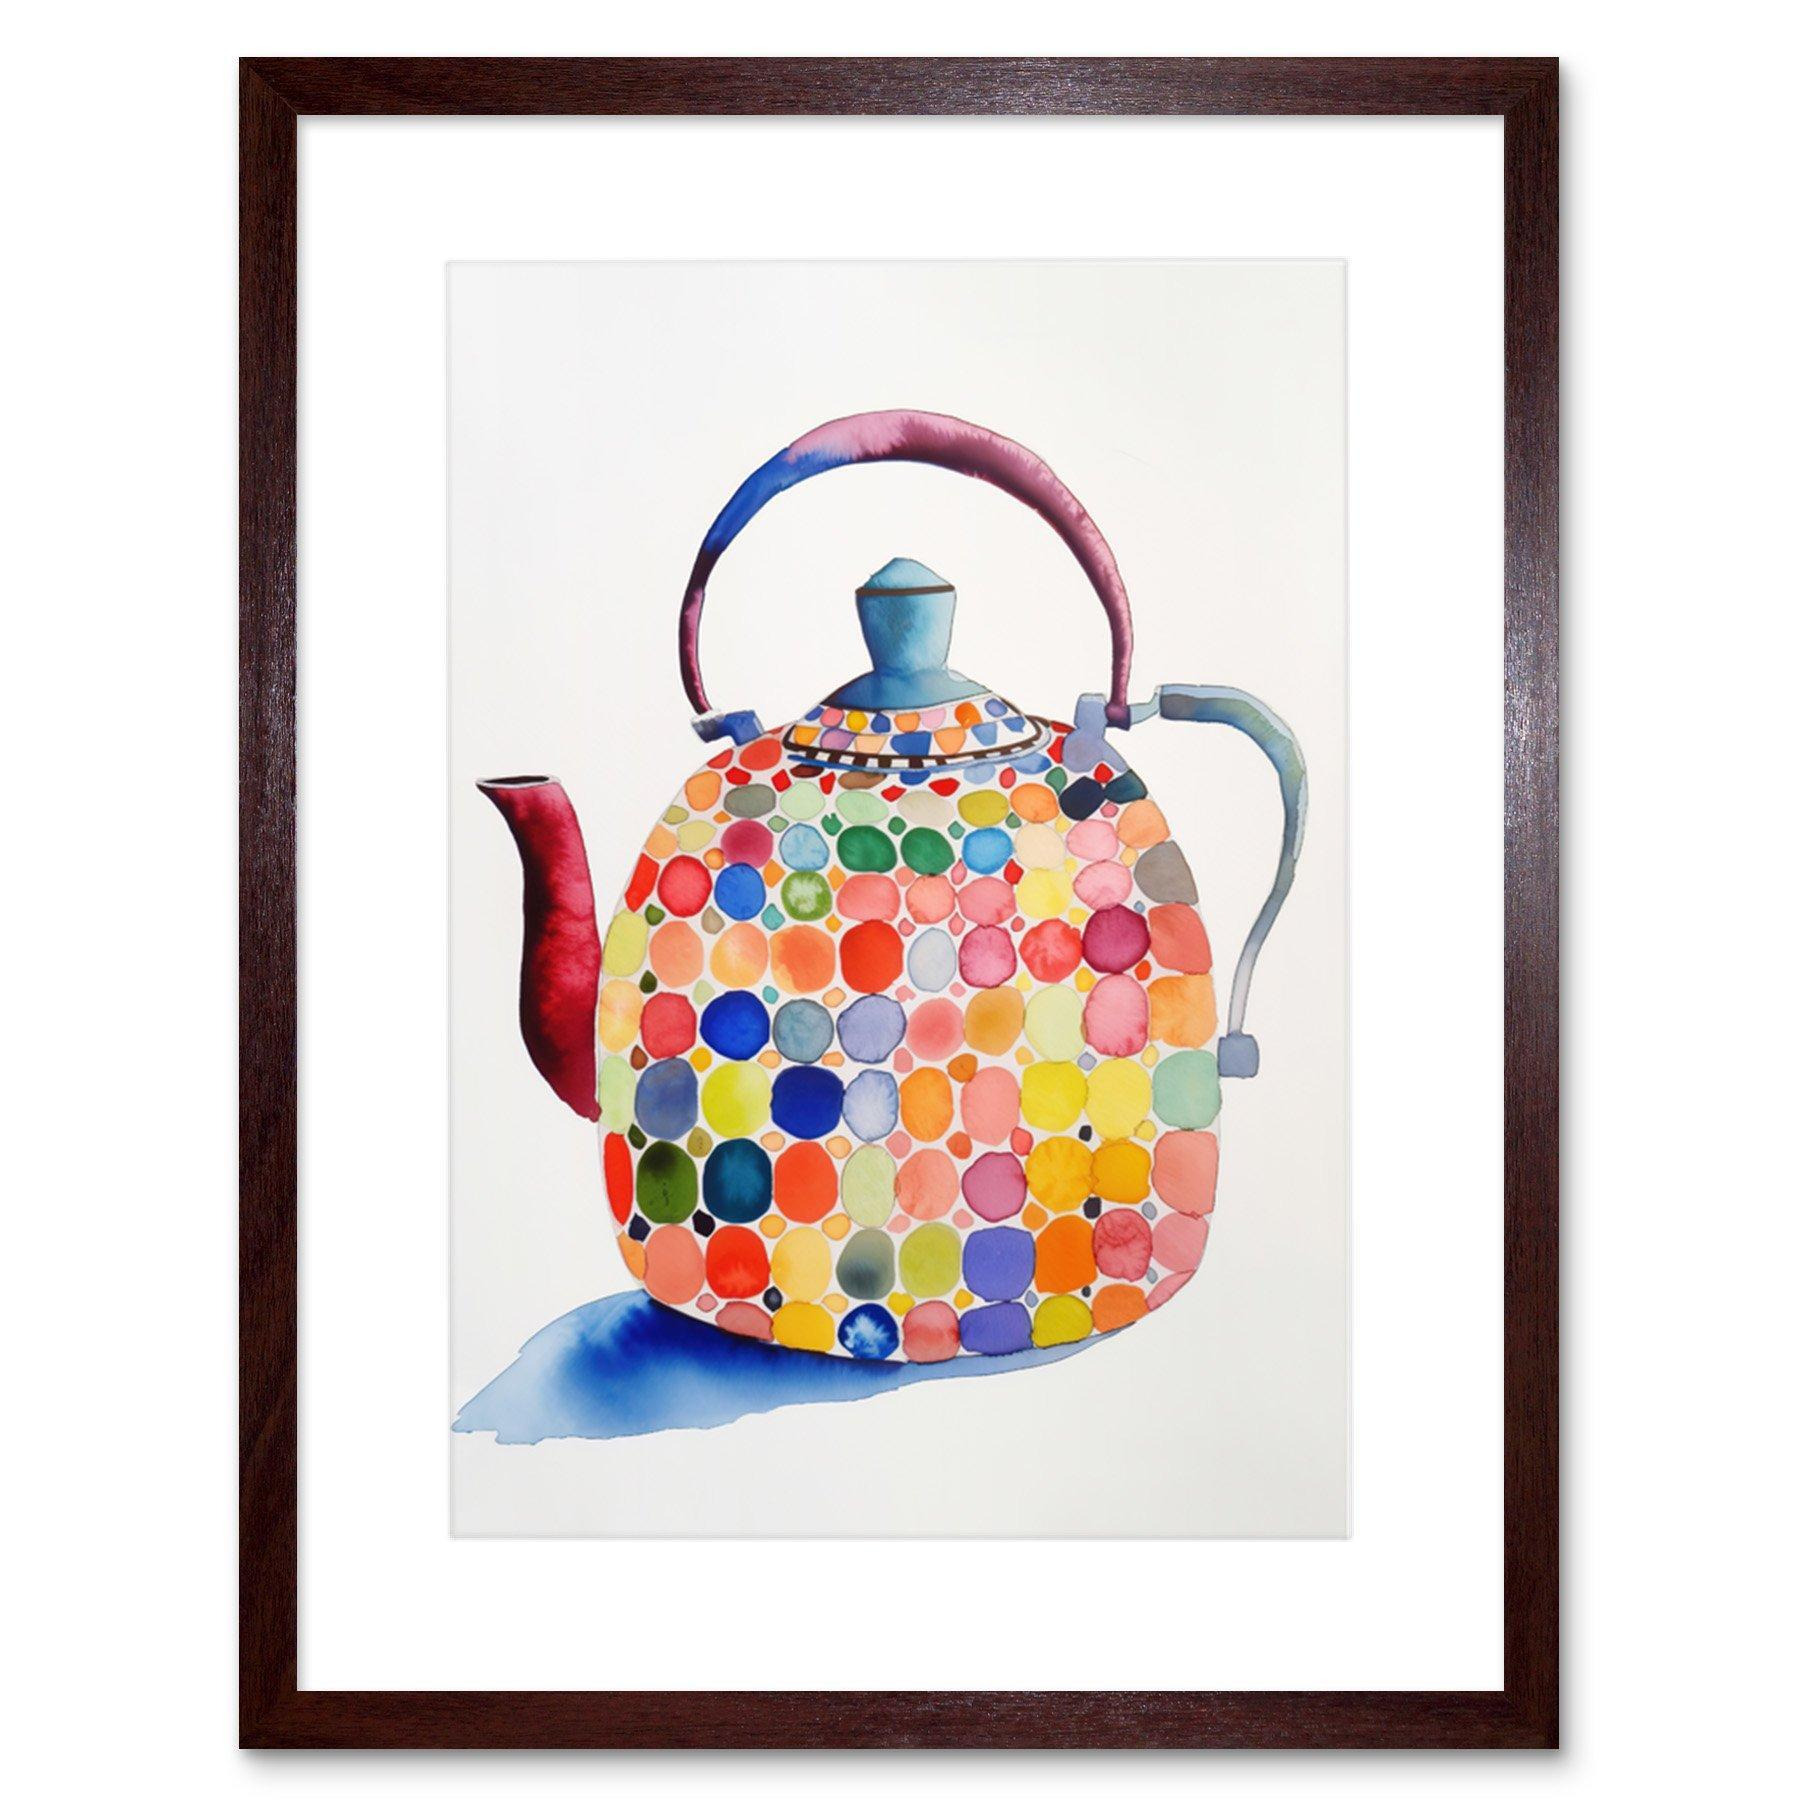 Colourful Enamelled Teapot Tea Kettle Folk Art Watercolour Painting Artwork Framed Print Wall Art 9X7 Inch - image 1